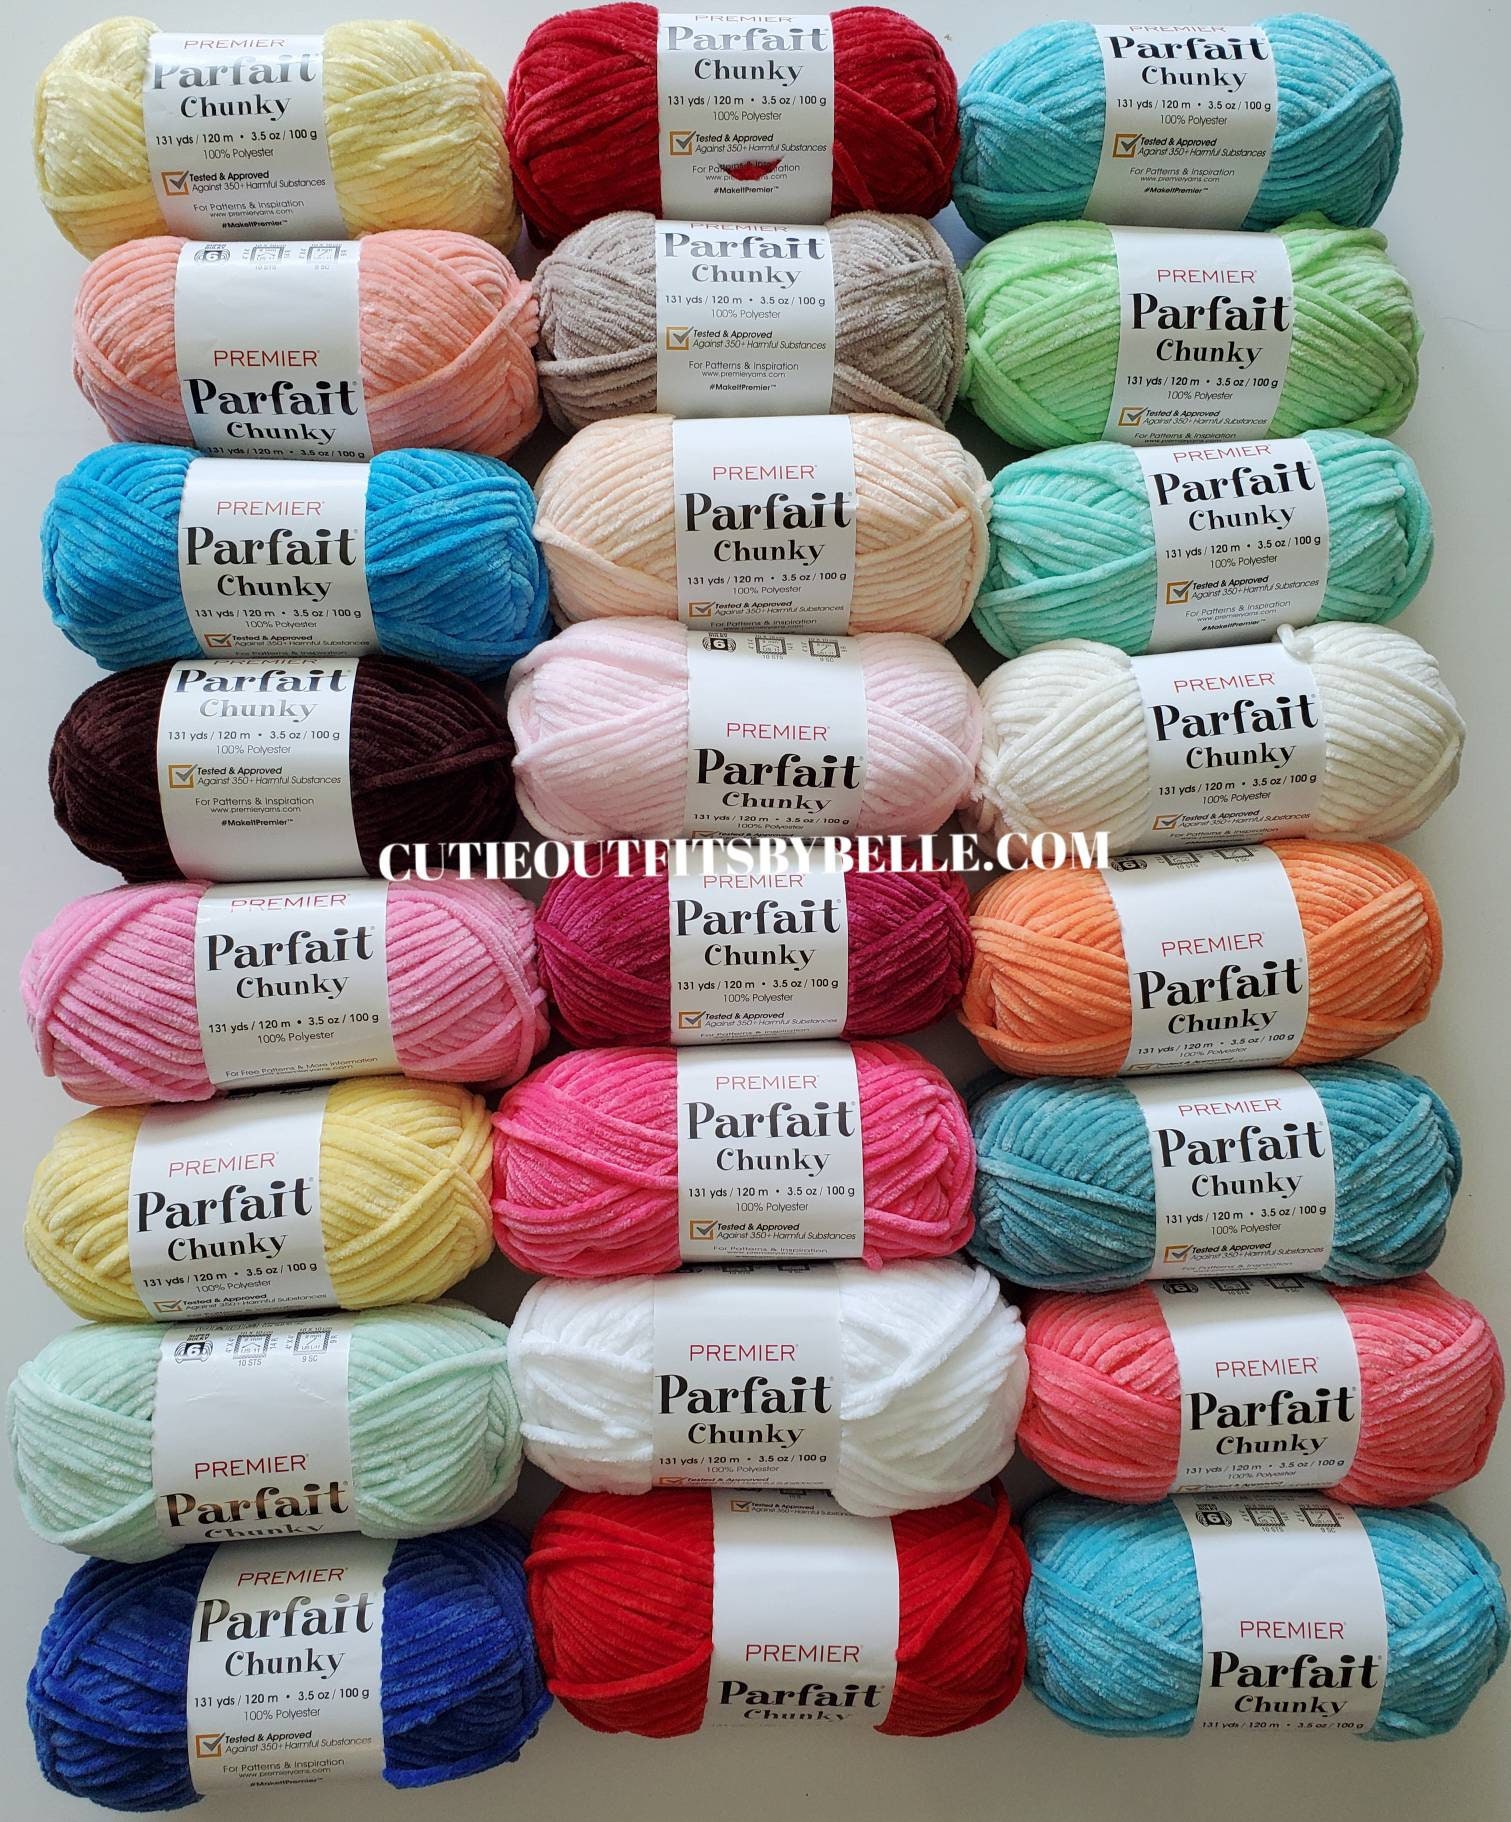 Yarn Review - Premier Parfait Yarn - Bag O Day Crochet Video 